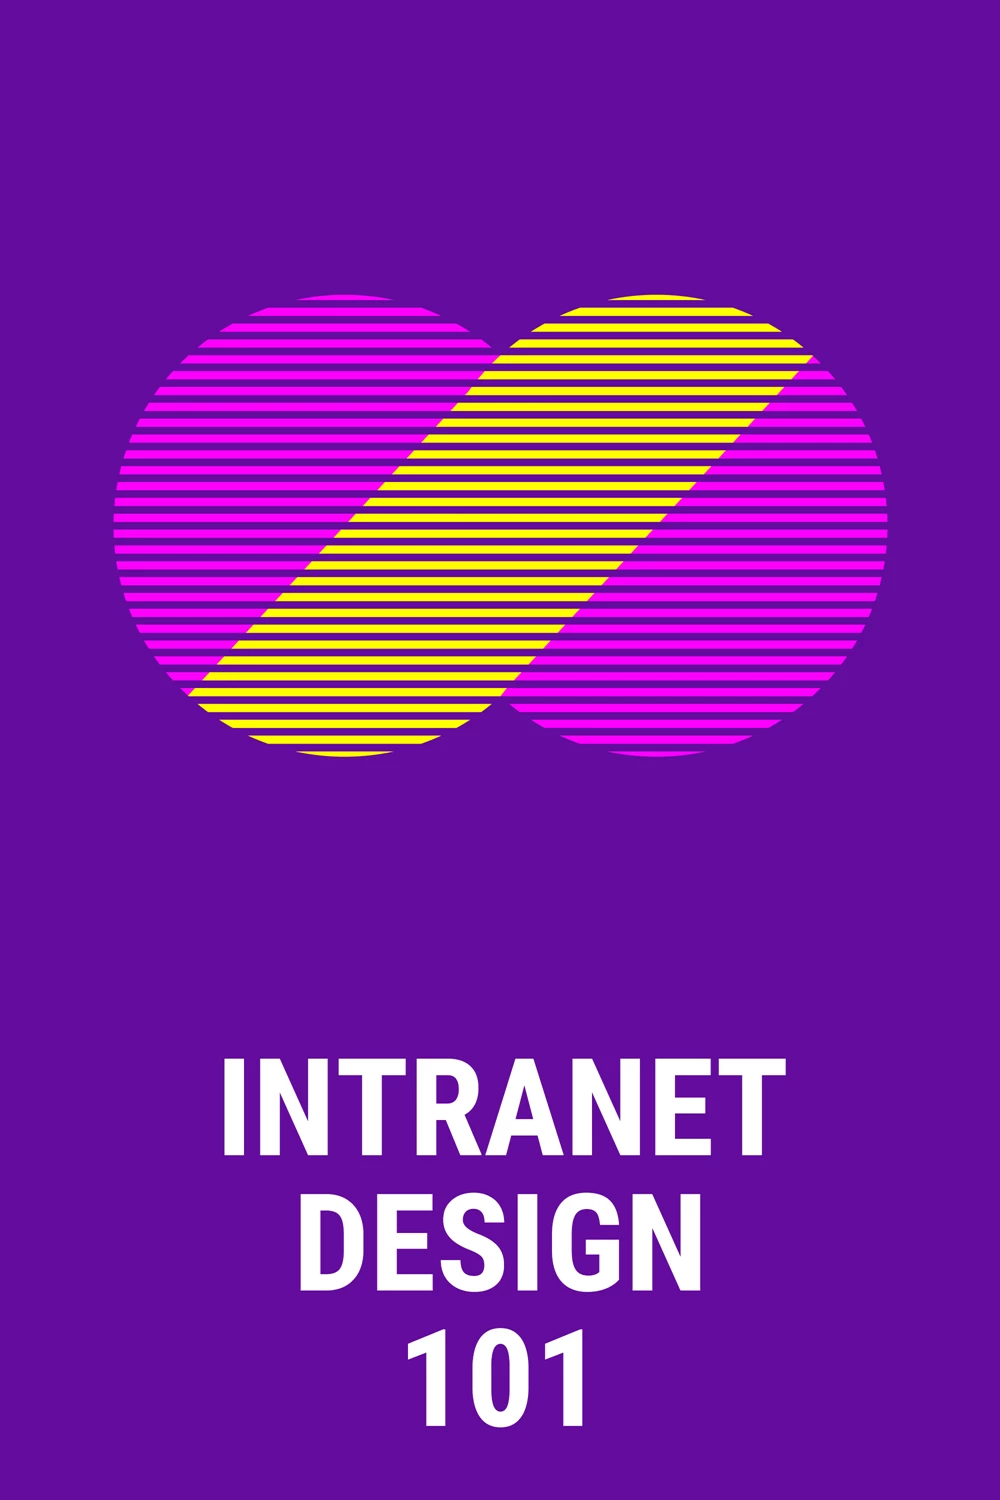 Intranet design 101